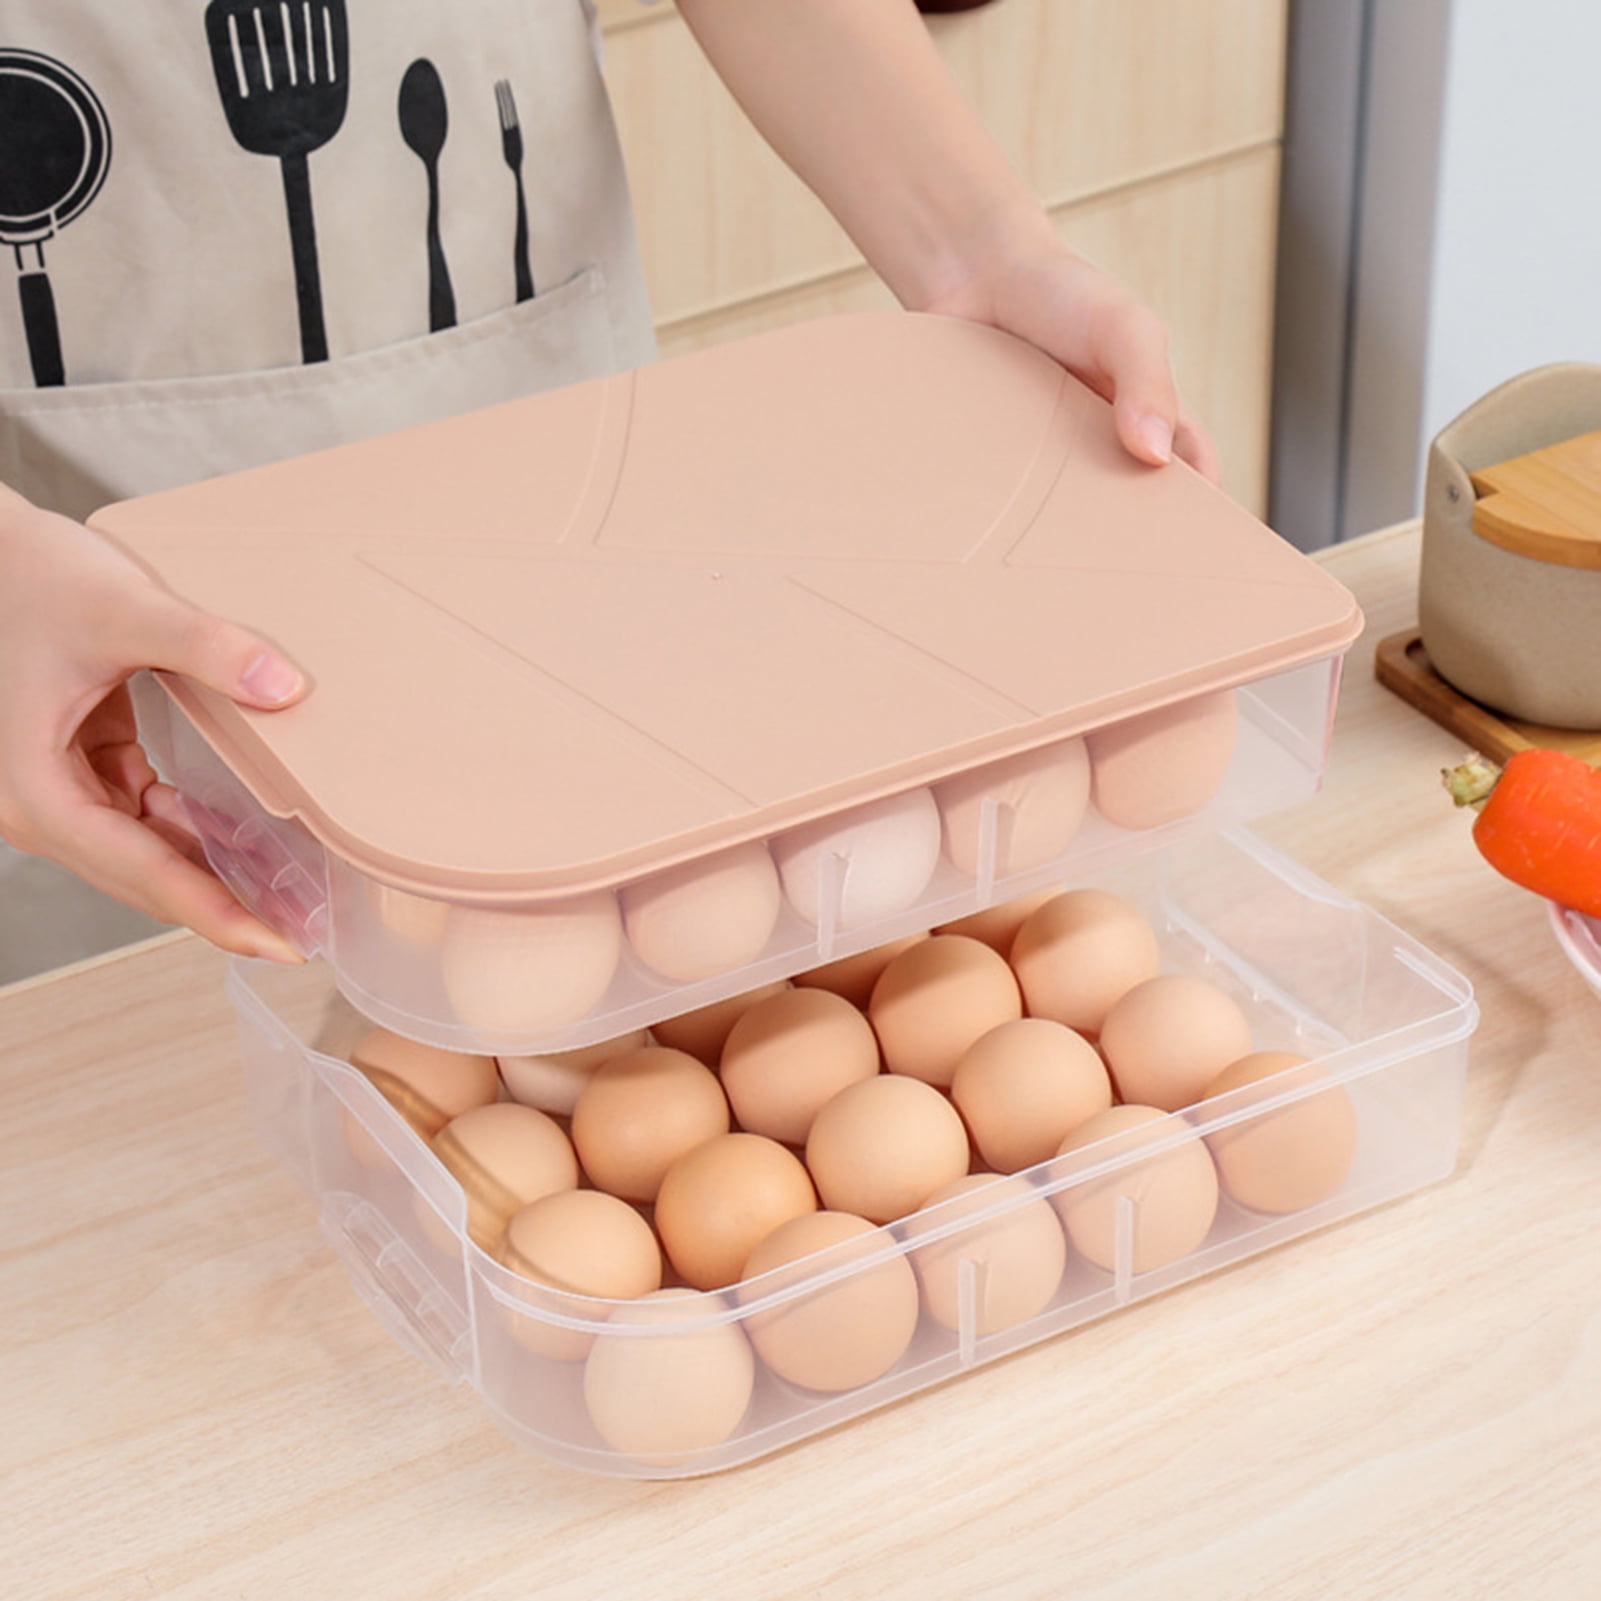 thorityau 10 Lattices Egg Tray Egg Storage Container With Lid Clear Egg Storage Box Plastic Egg Holder Trays Refrigerator Egg Holder Rack 